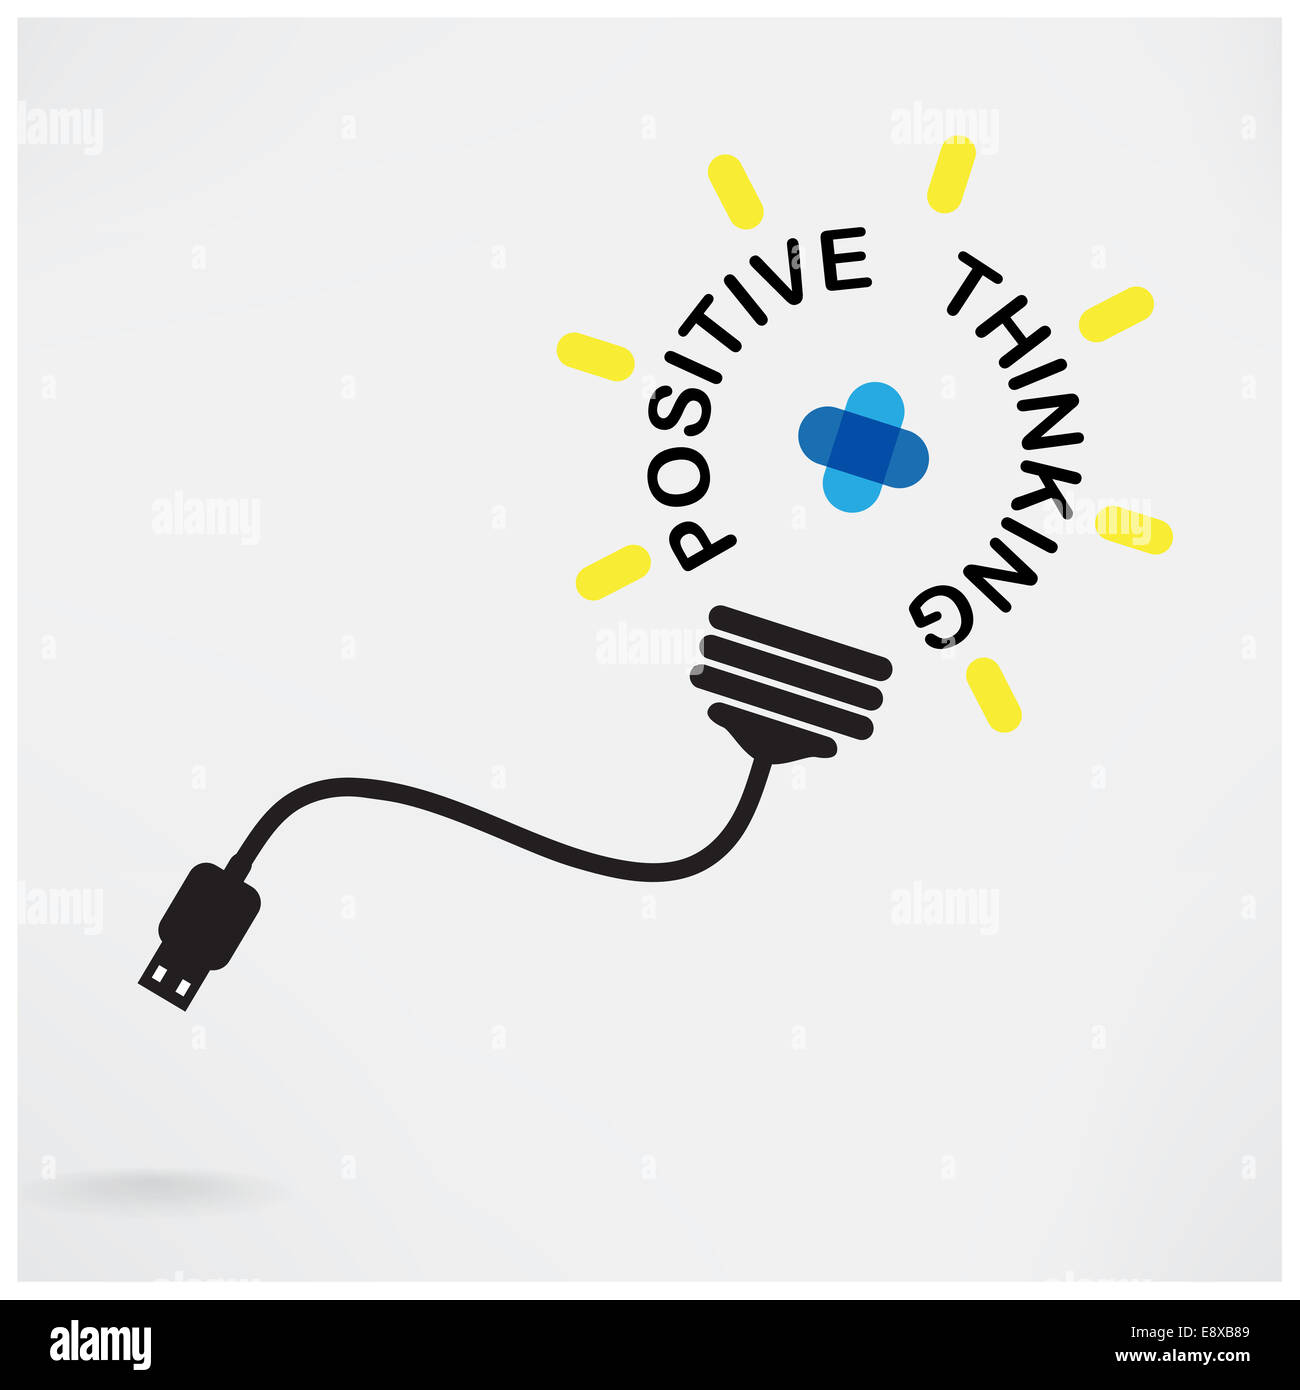 Kreative Glühbirne Idee, Geschäftsidee, abstrakten Symbol, positives Denken Konzept, Bildungskonzept. Stockfoto